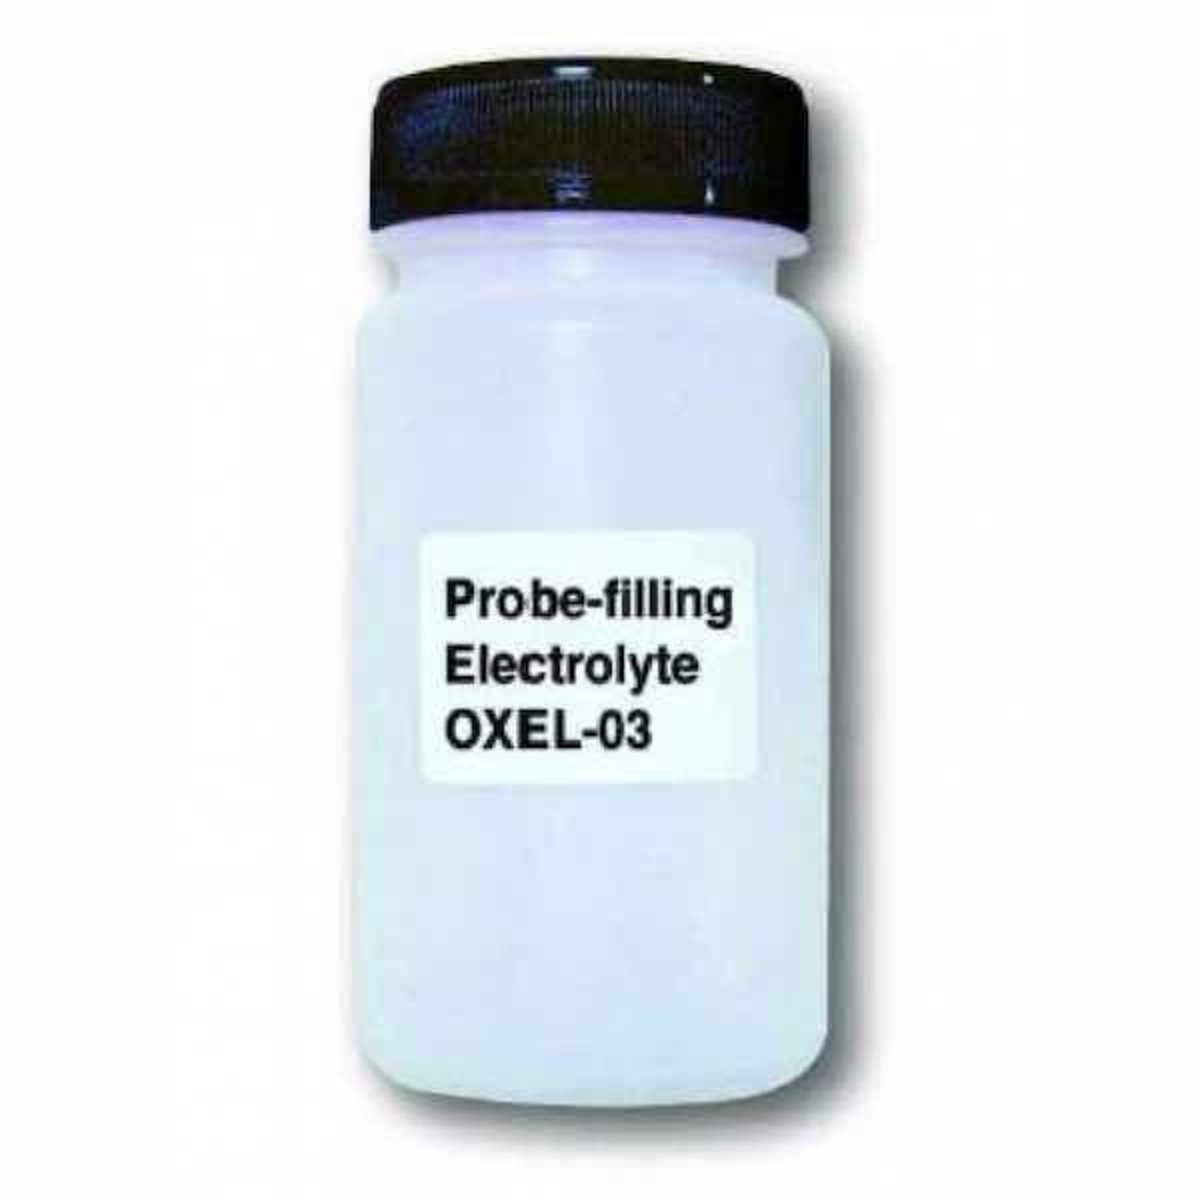 LUTRON OXEL-03 PROBE-FILLING ELECTROLYTE